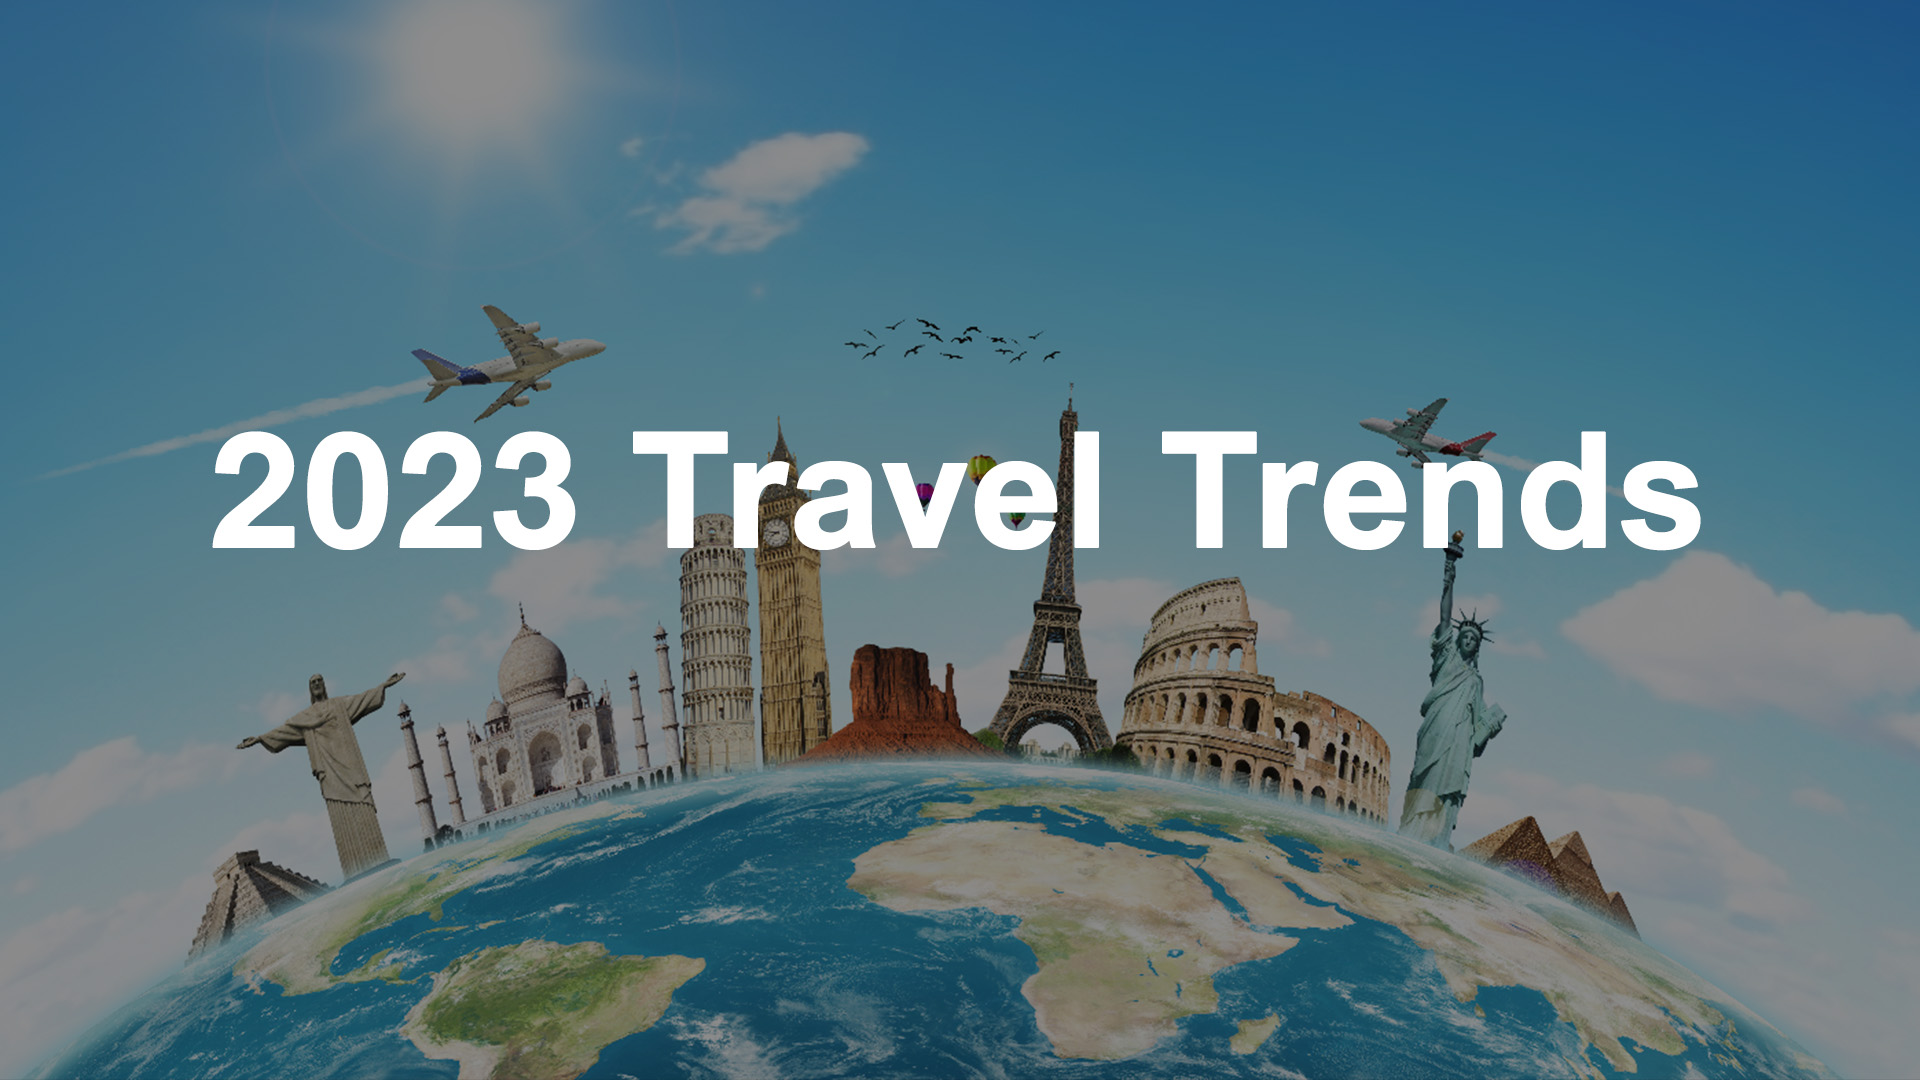 Top Travel Trends of 2023